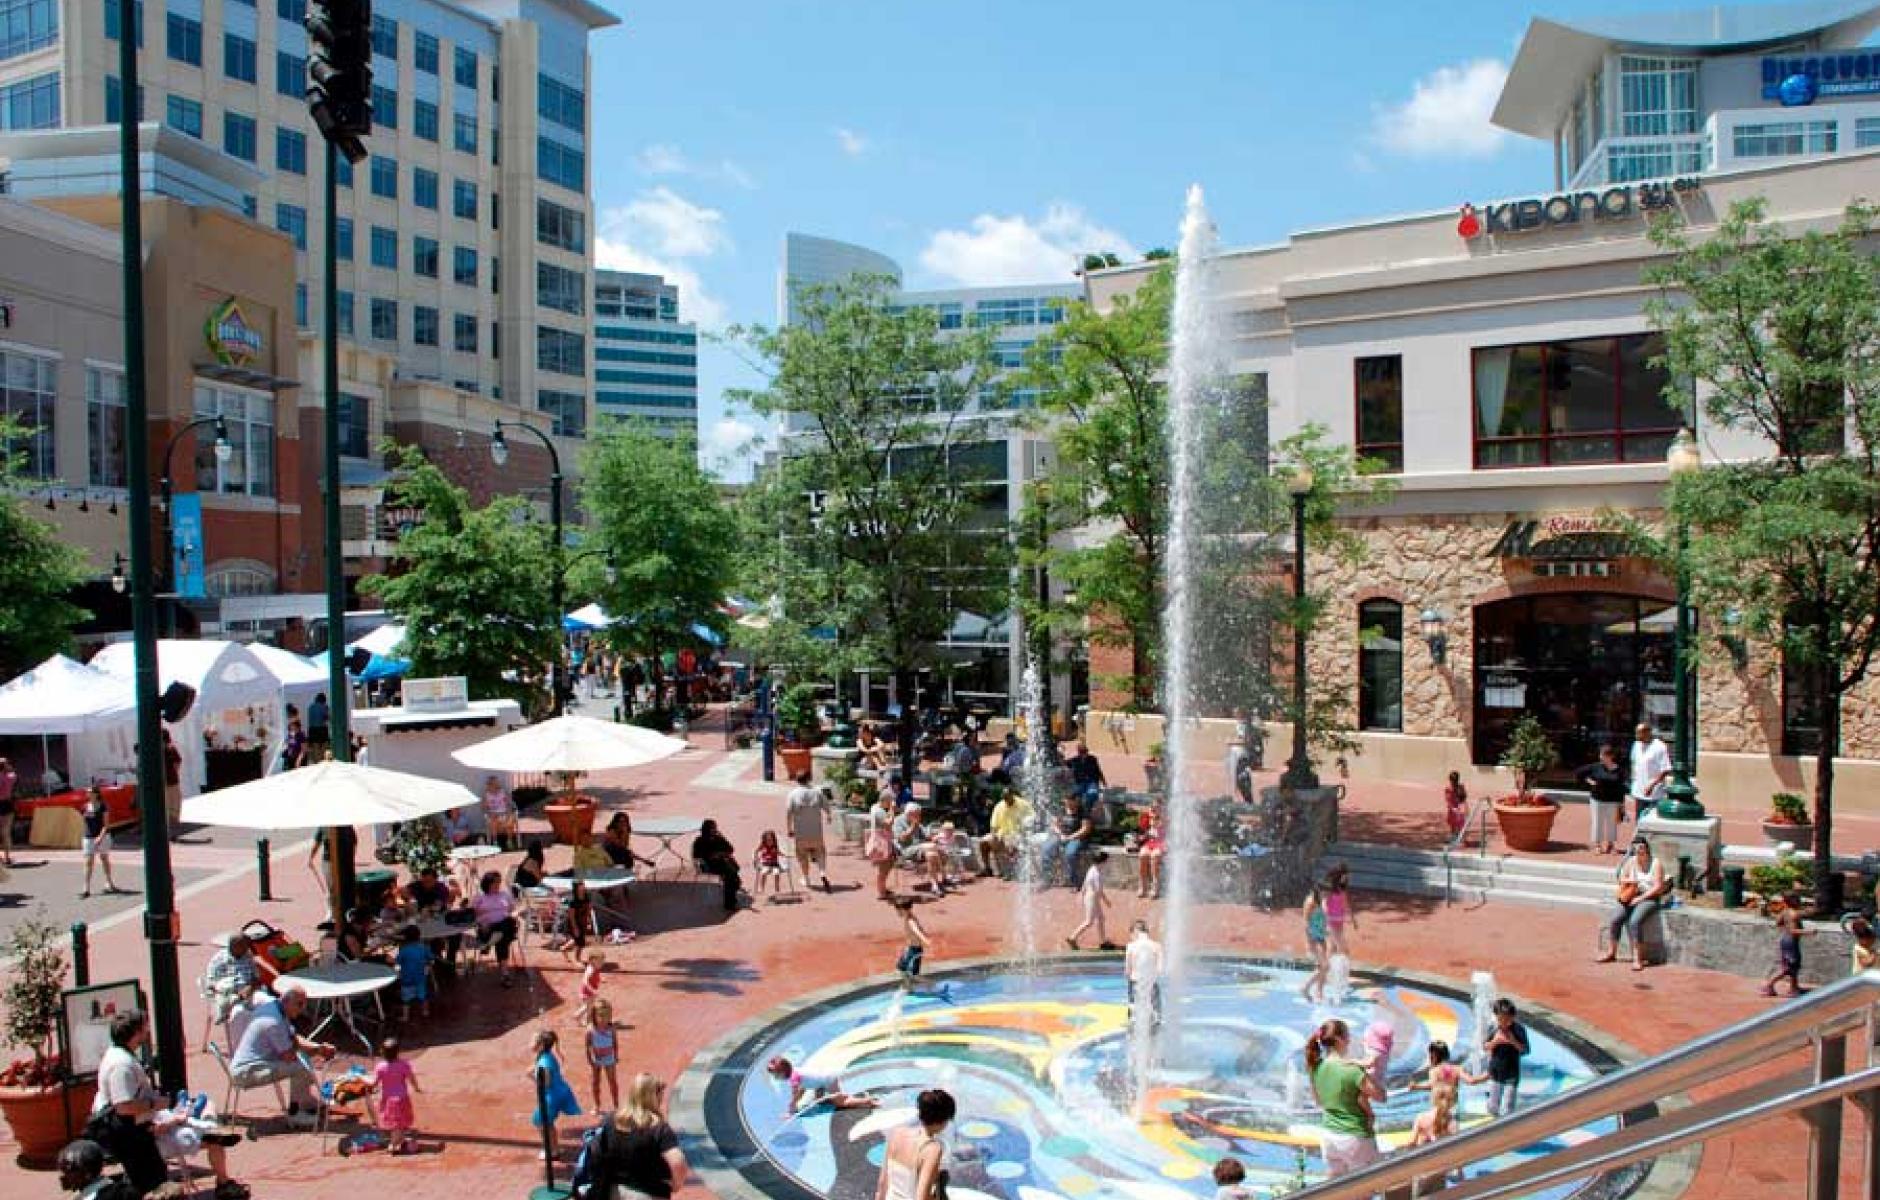 Town Center Mall, Official Georgia Tourism & Travel Website